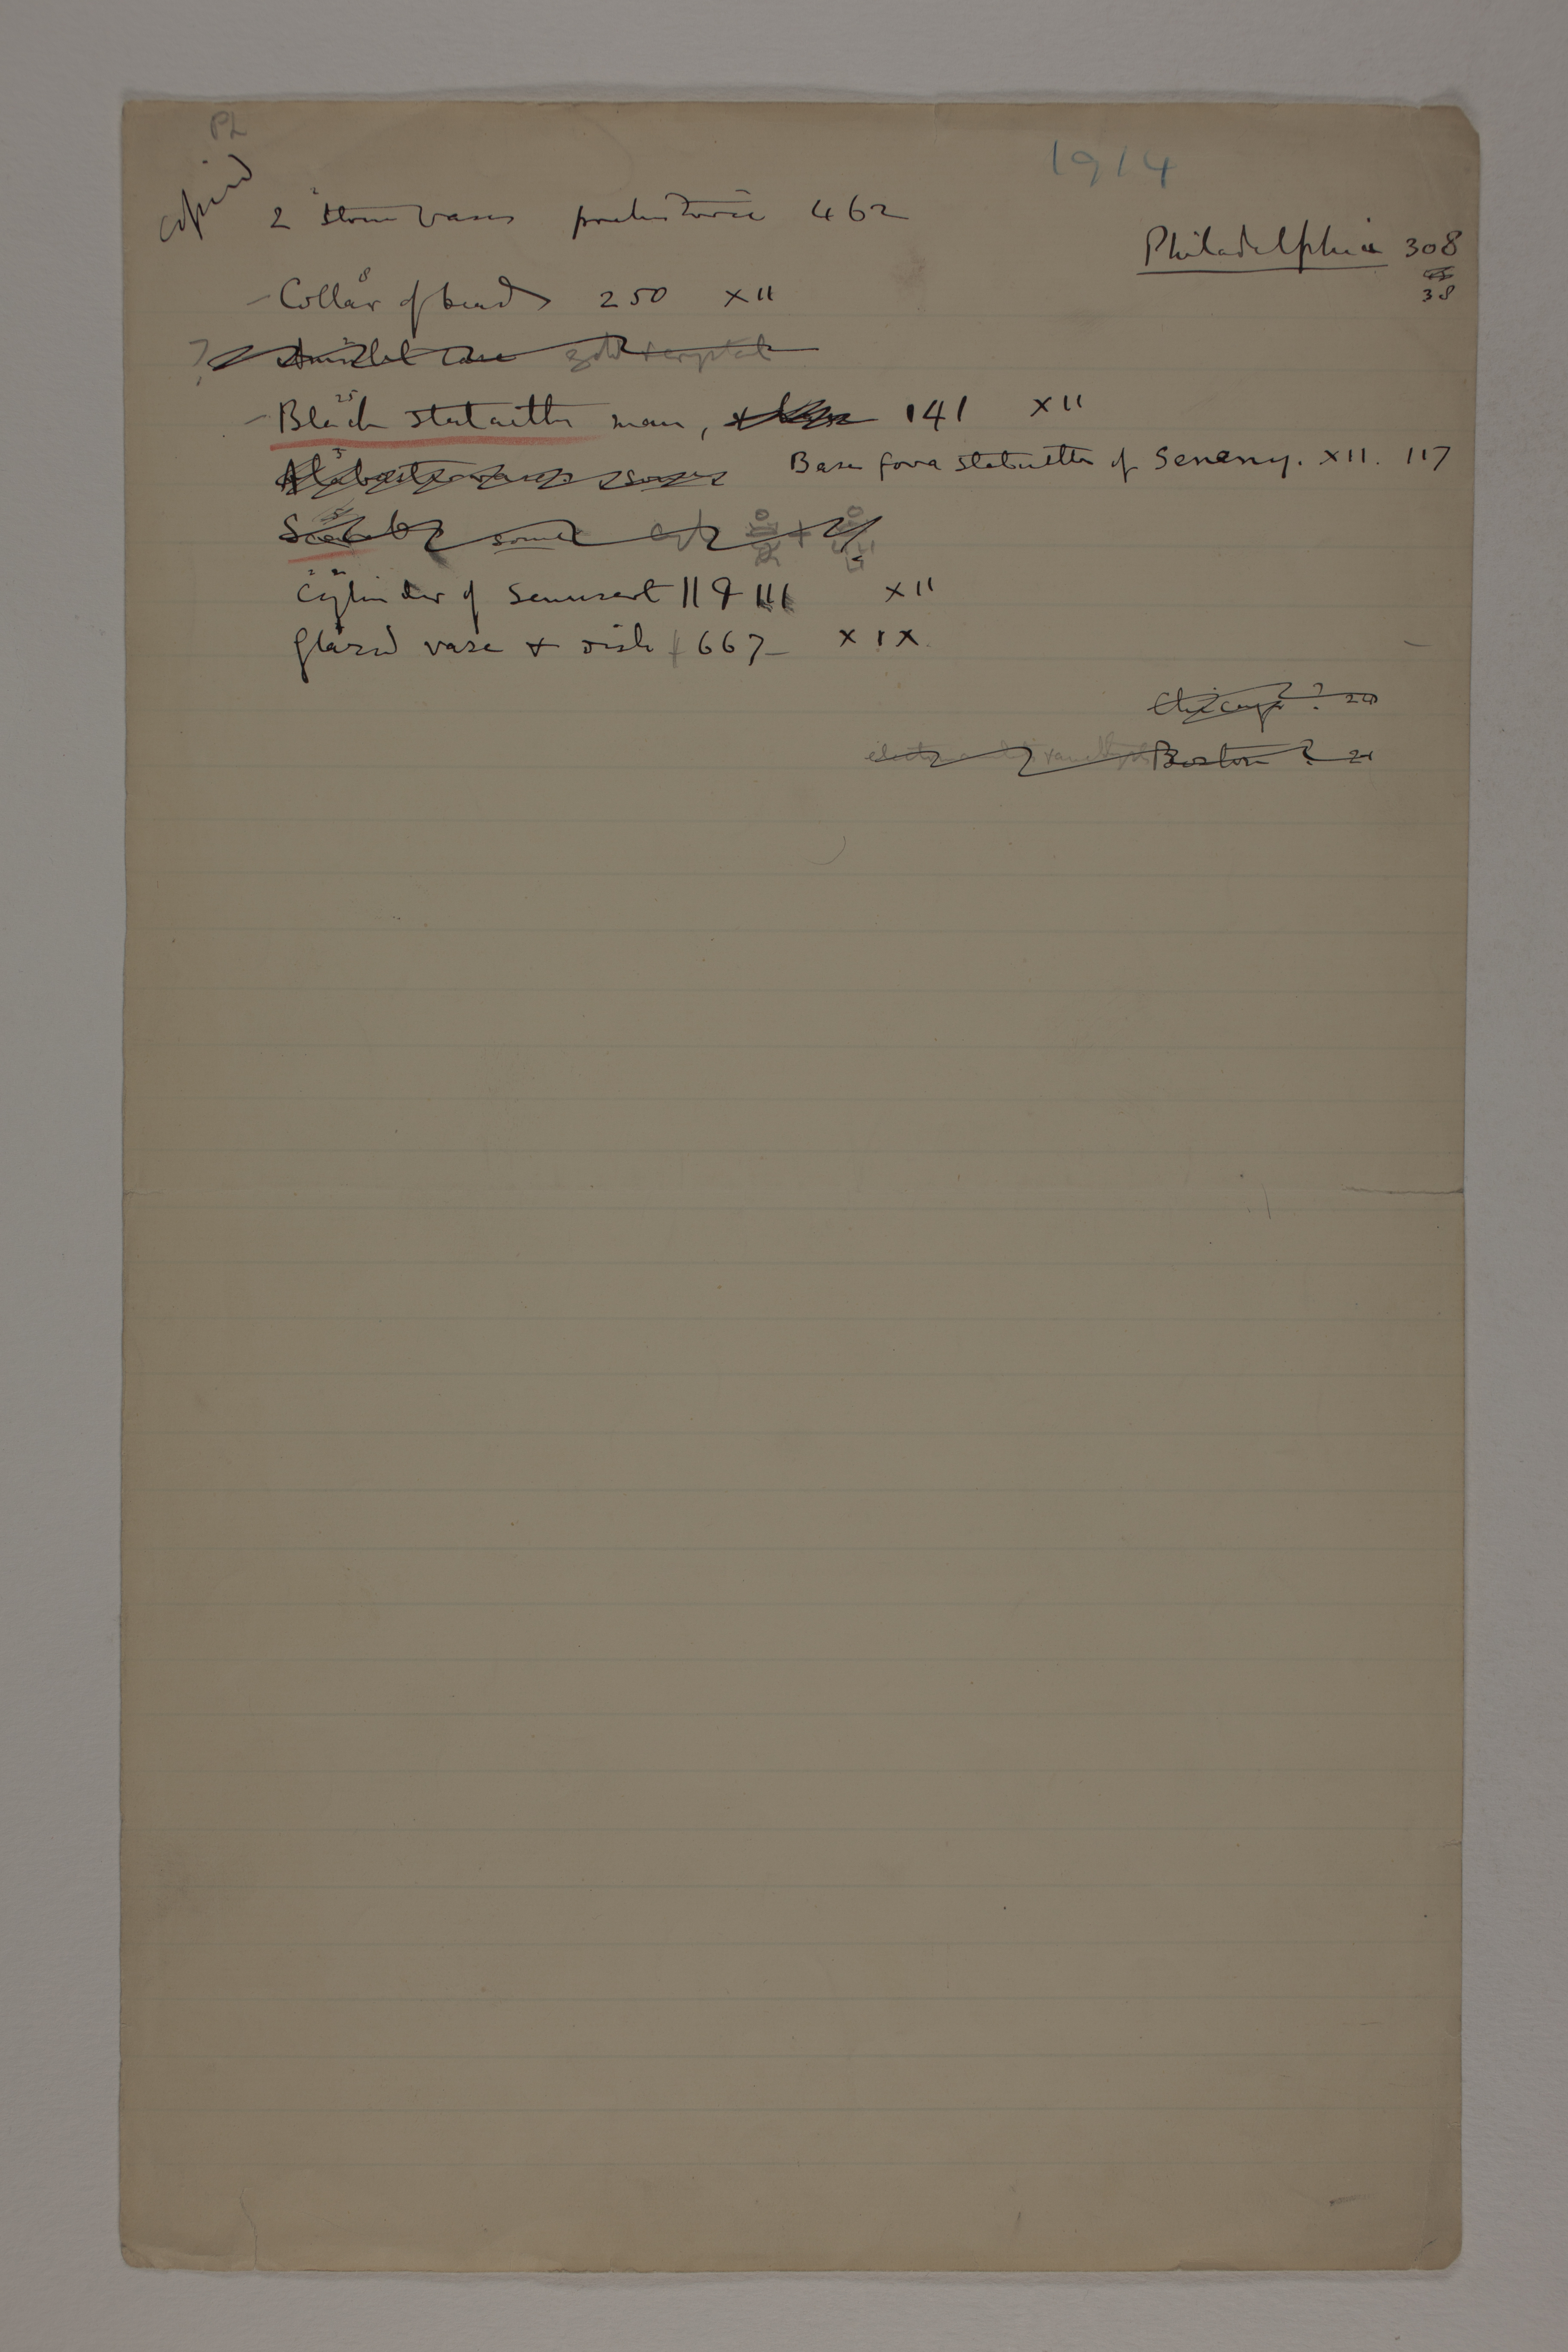 1913-14 Lahun, Haraga Individual institution list  PMA/WFP1/D/22/34